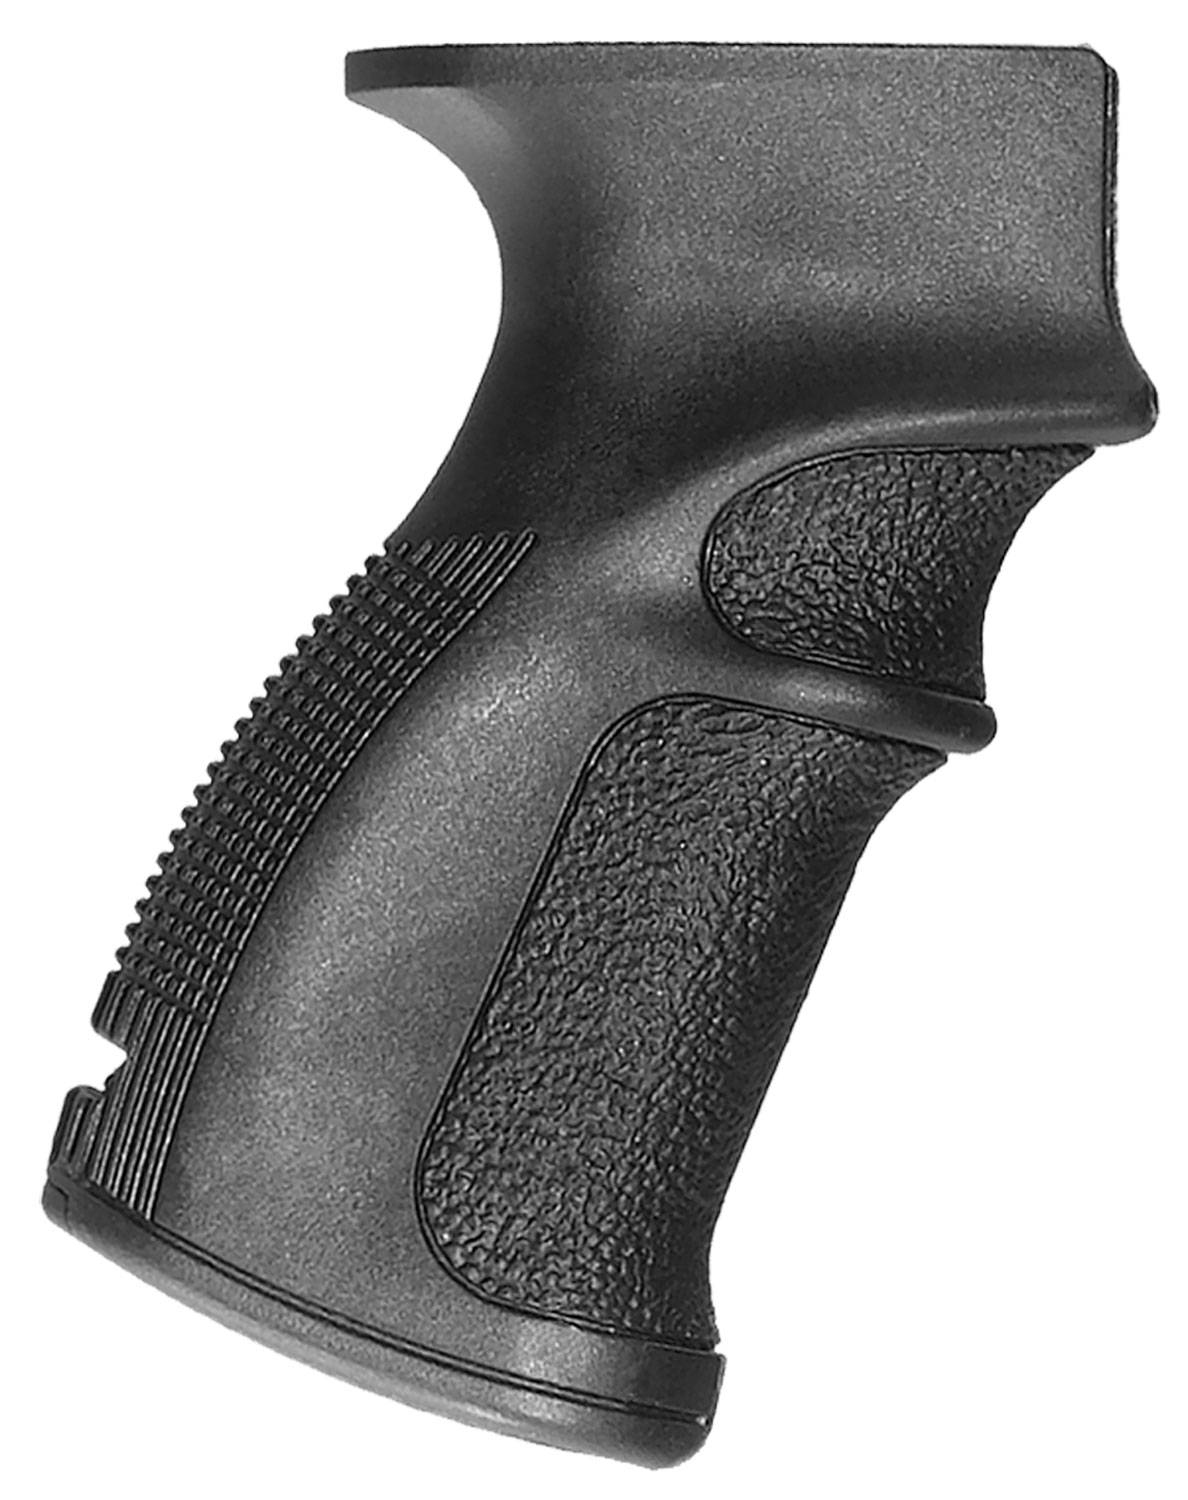 FAB DEFENSE (USIQ) FX-AG58B AG-58  SA VZ 58 Pistol Grip Polymer Black